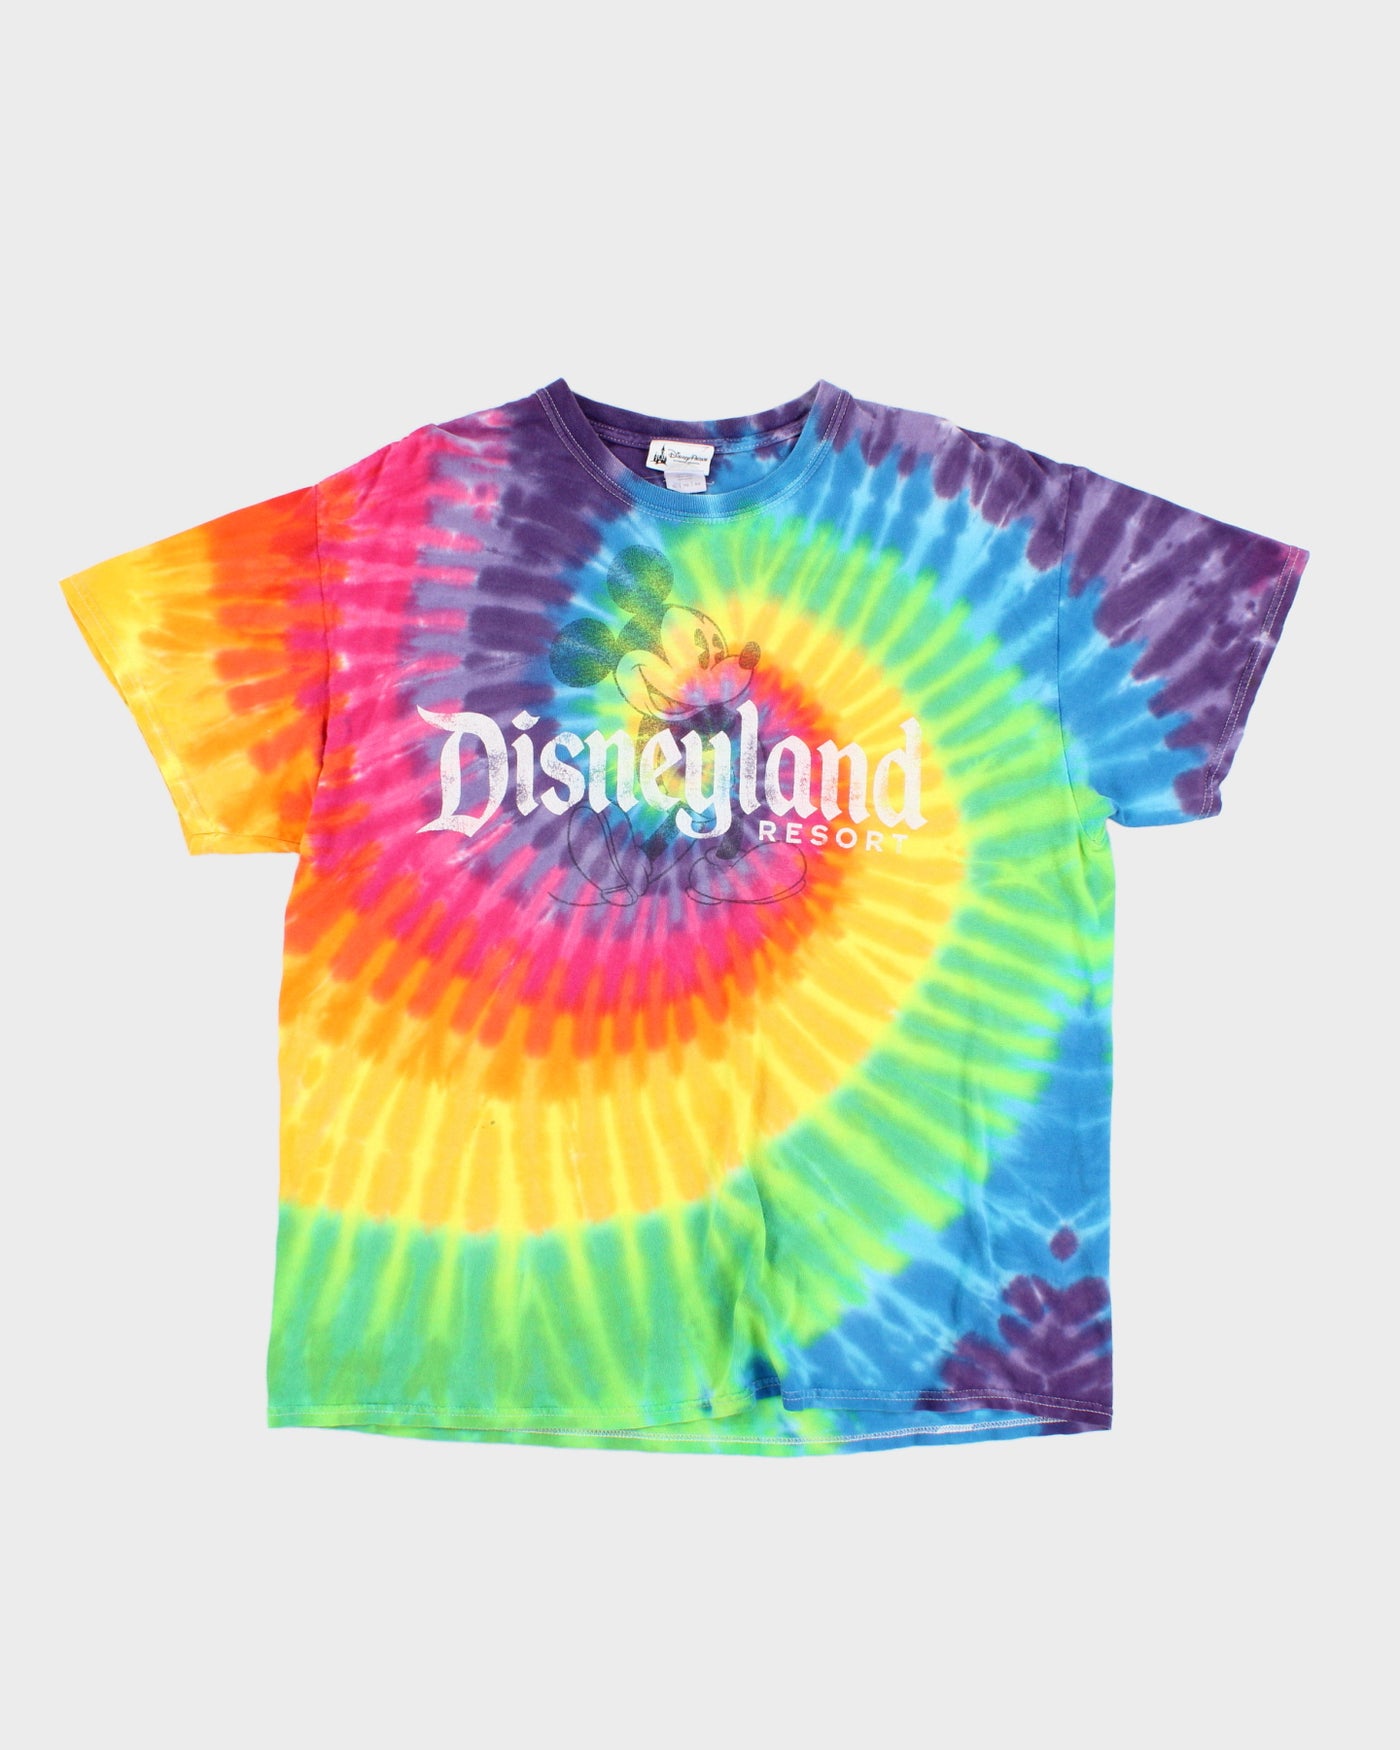 00s Disneyland Tie-Dye T-Shirt - XL